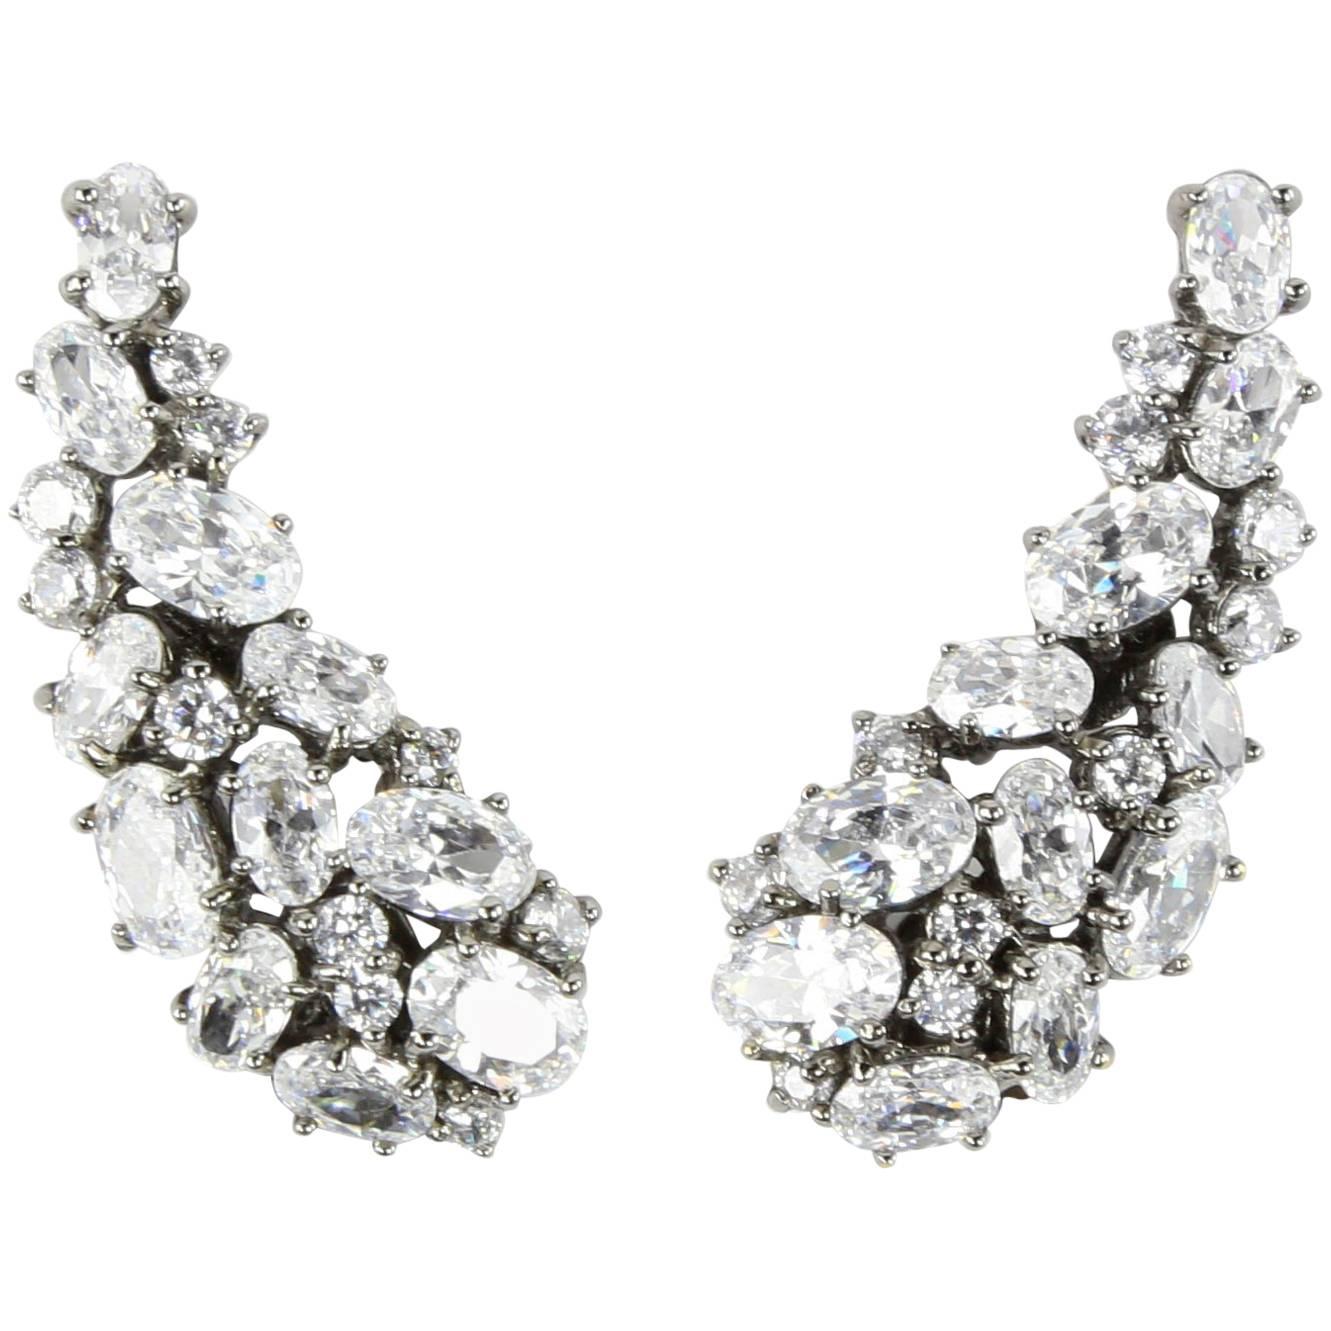 Stunning Faux Brilliant Cut Diamond Demi Lune Sterling Silver Runway Earrings